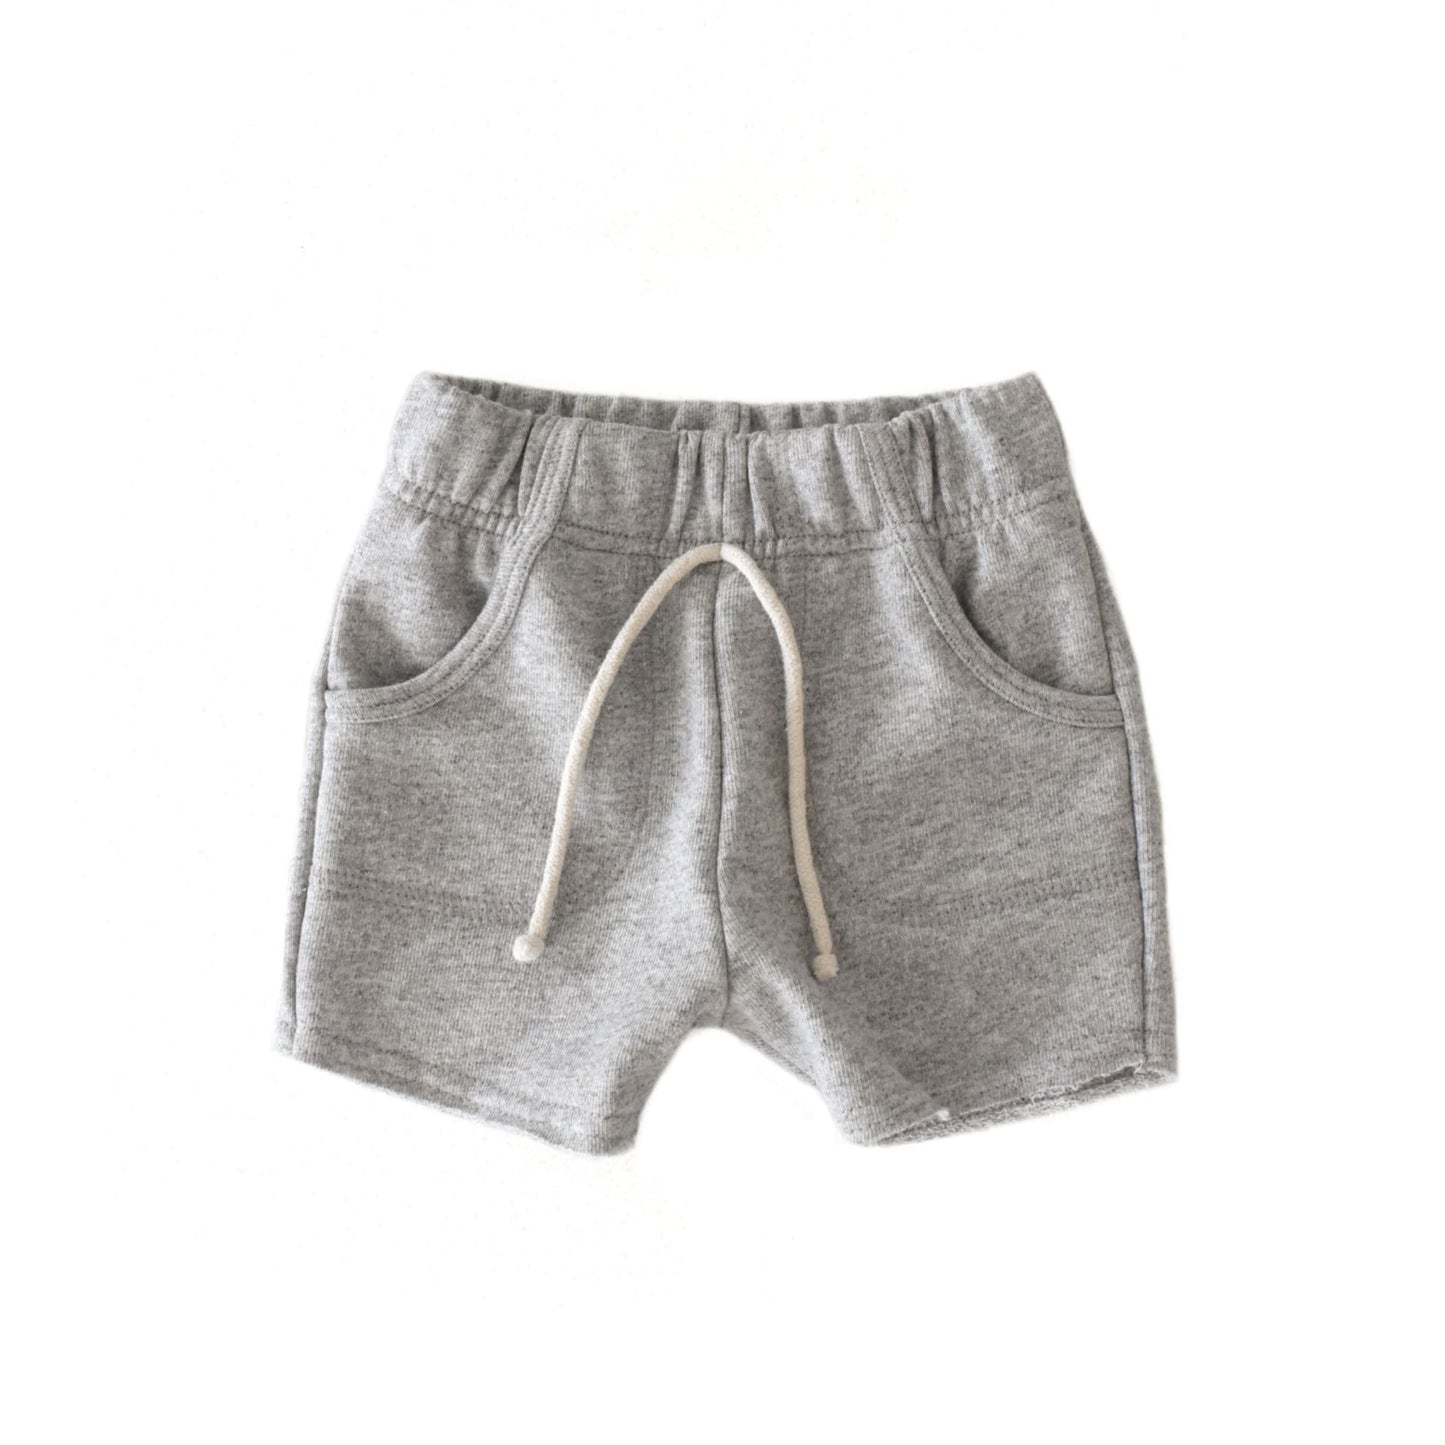 sk8 shorts - heathered grey